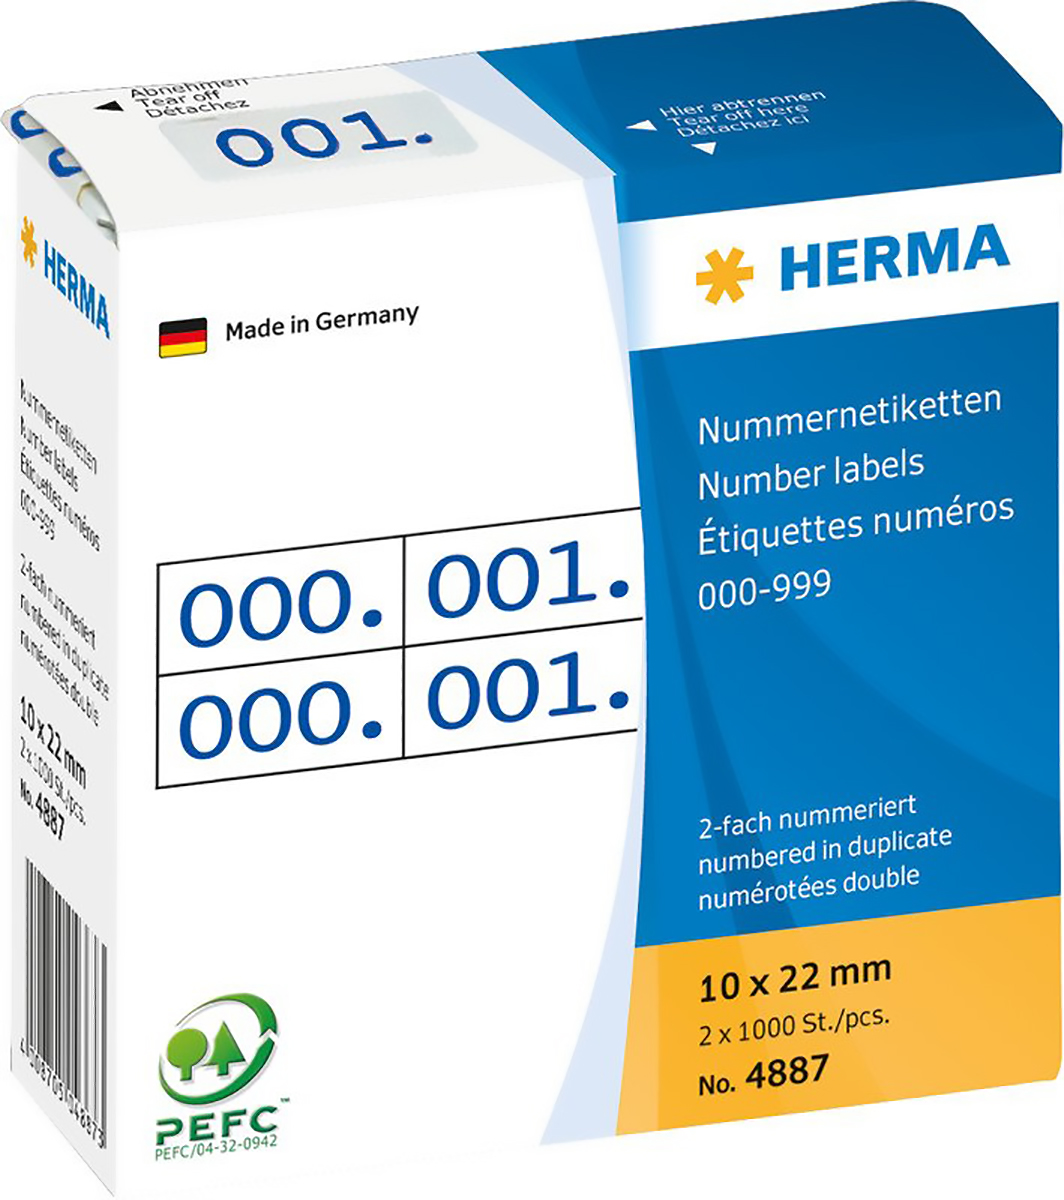 Herma Doppel-Nummer 0-999 10x22mm à 2 x 1000 Pic1